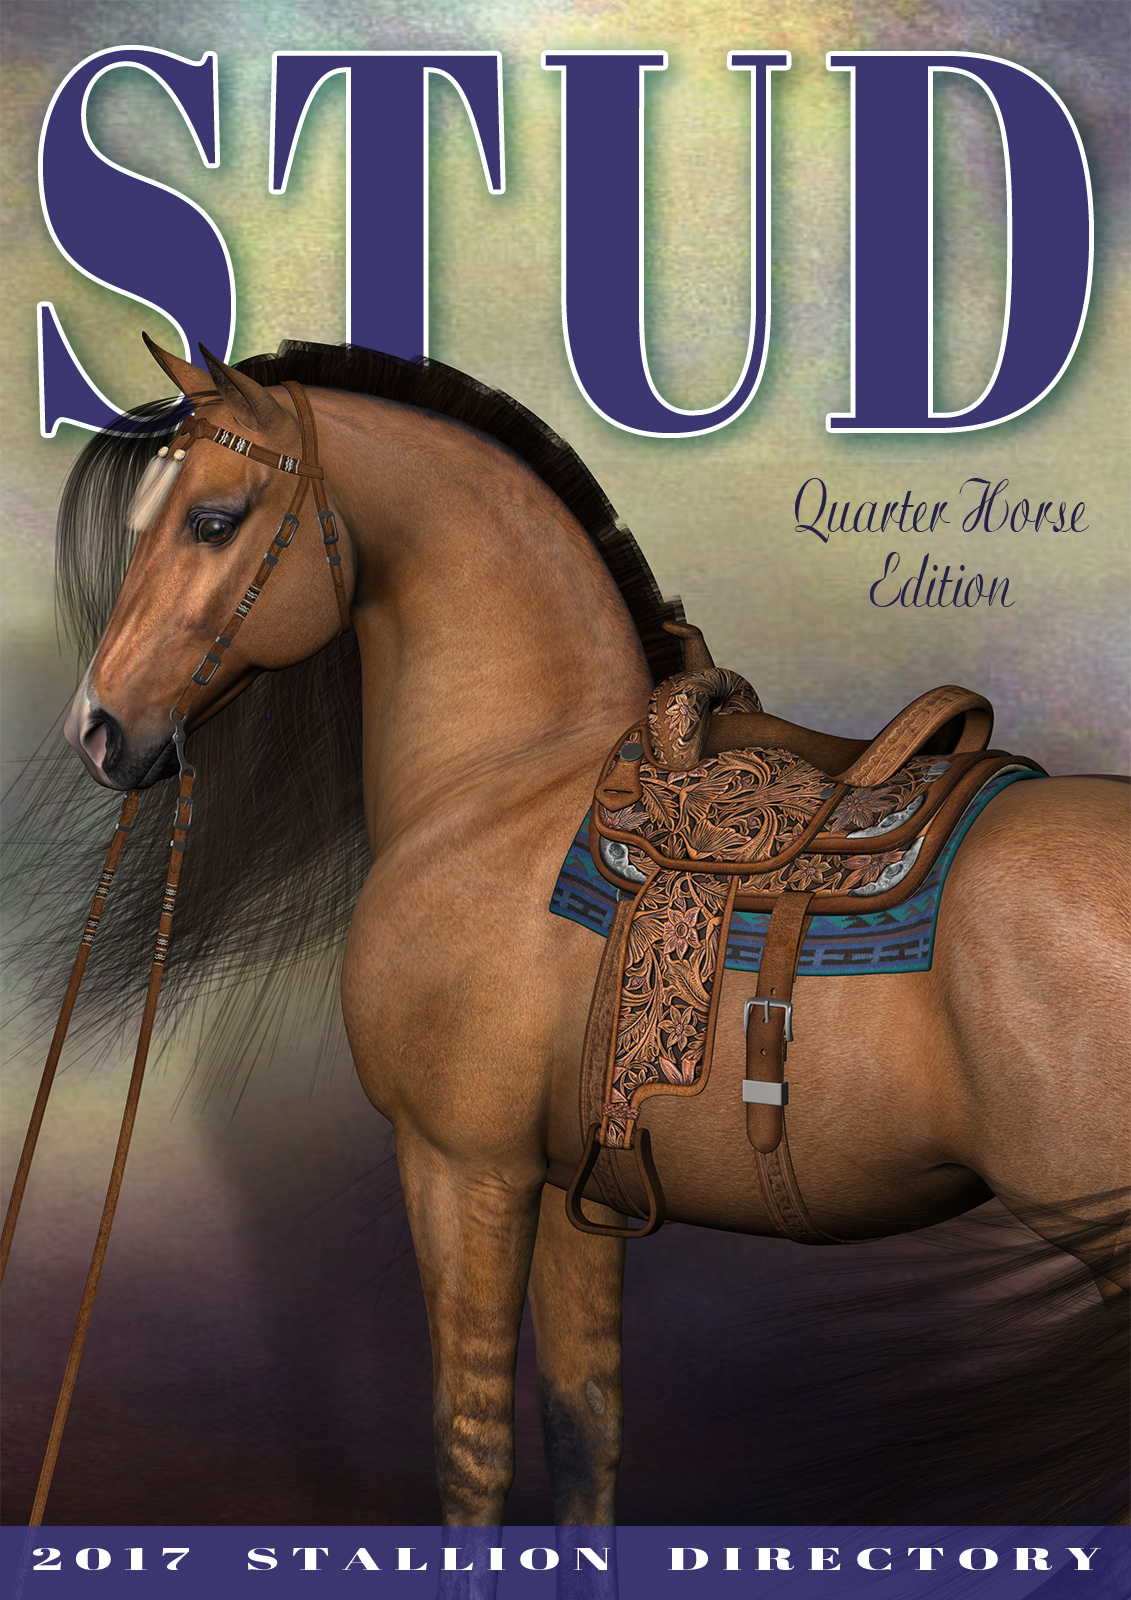 Magazine Cover - Stallion Directory - Quarter Horse Edition